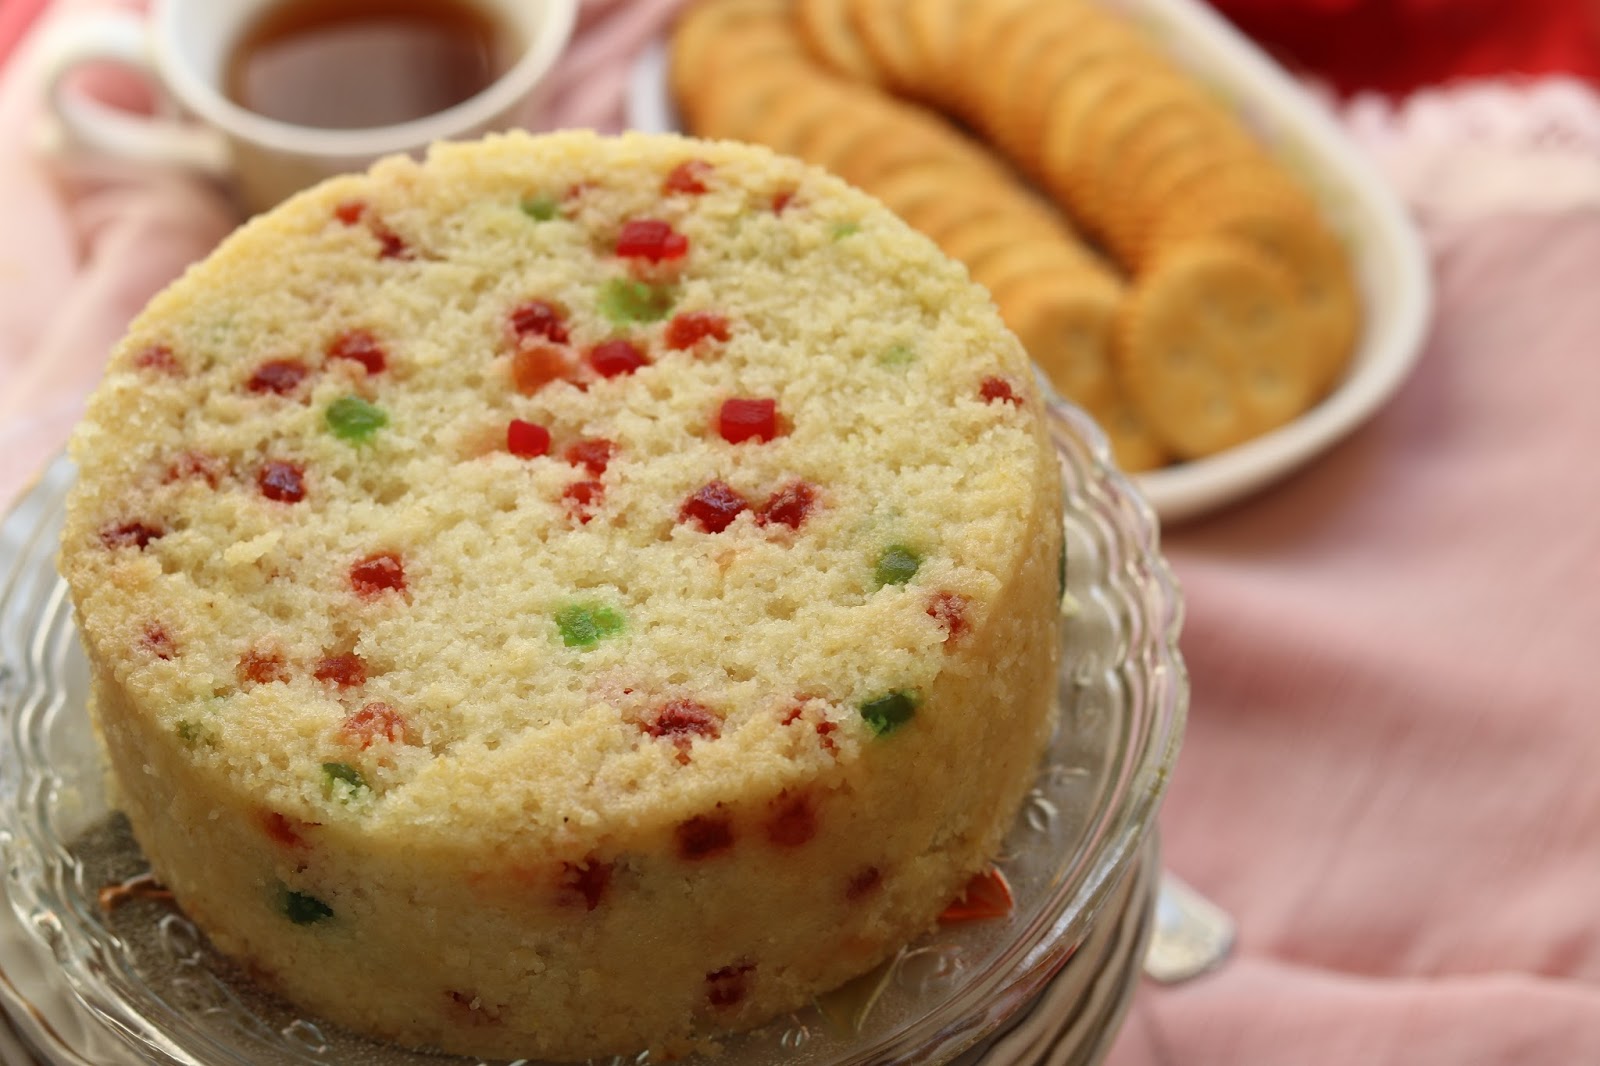 Healthy Kadai: Rava Cake Recipe in Pressure Cooker